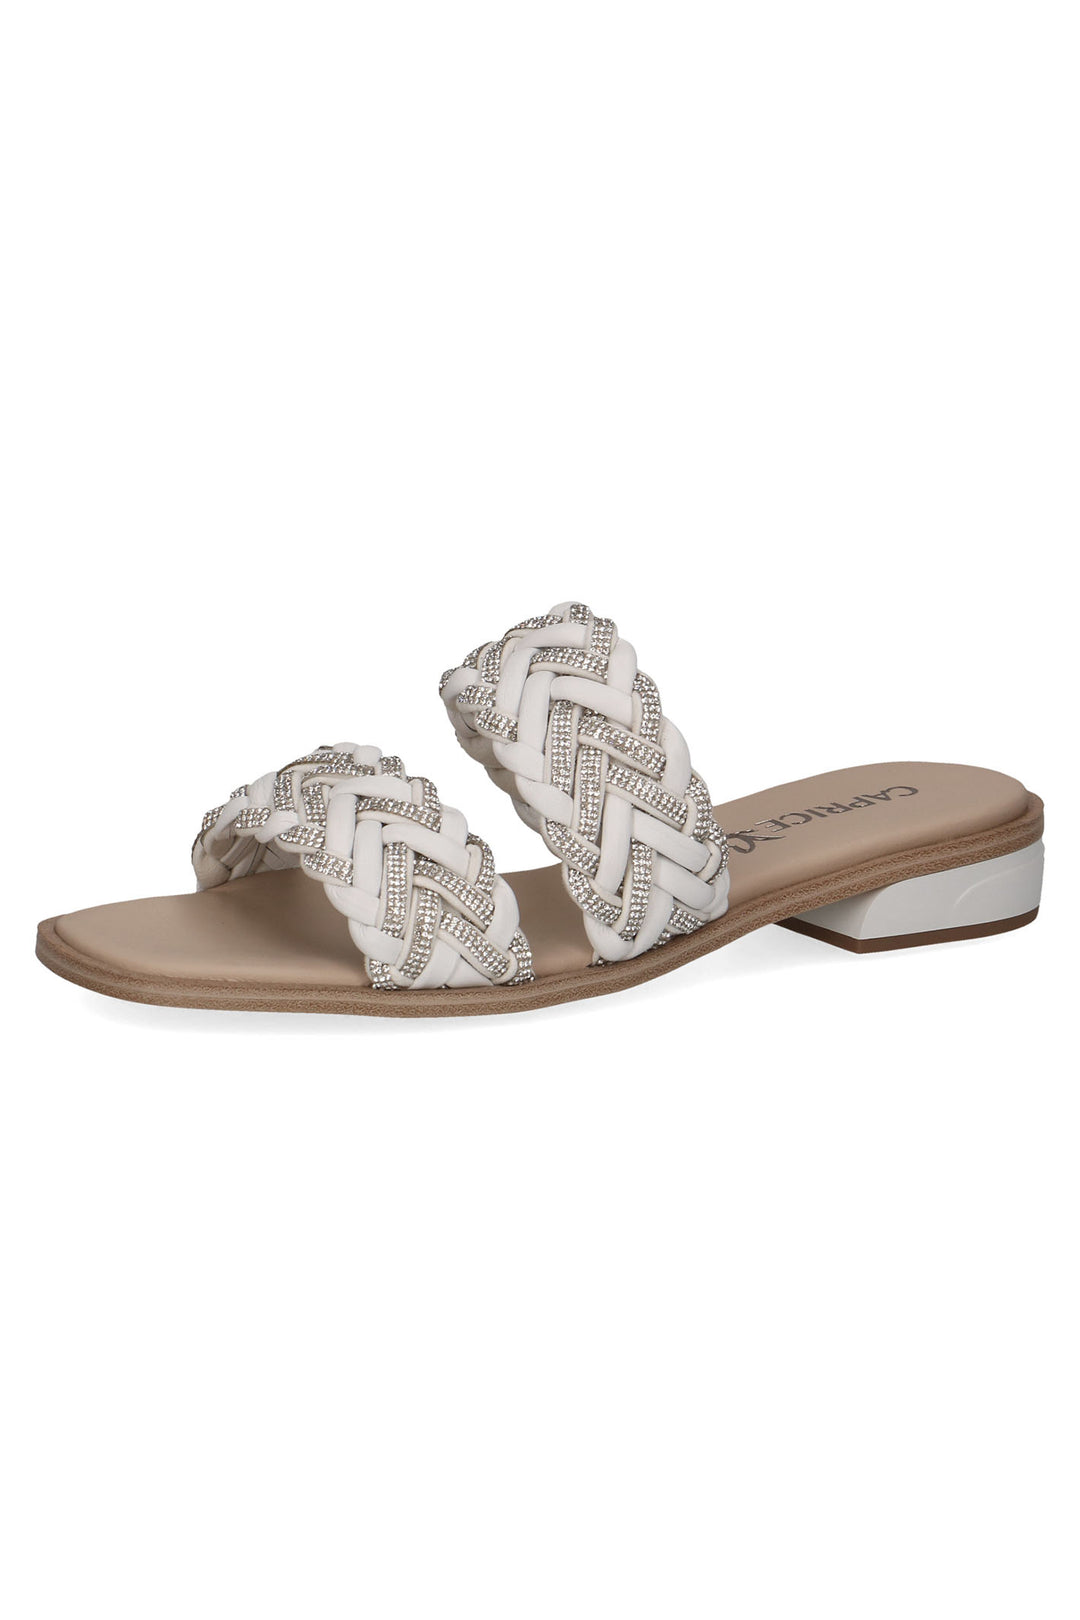 Caprice 9-27101-42 160 White Memotion Sandals - Rouge Boutique Inverness